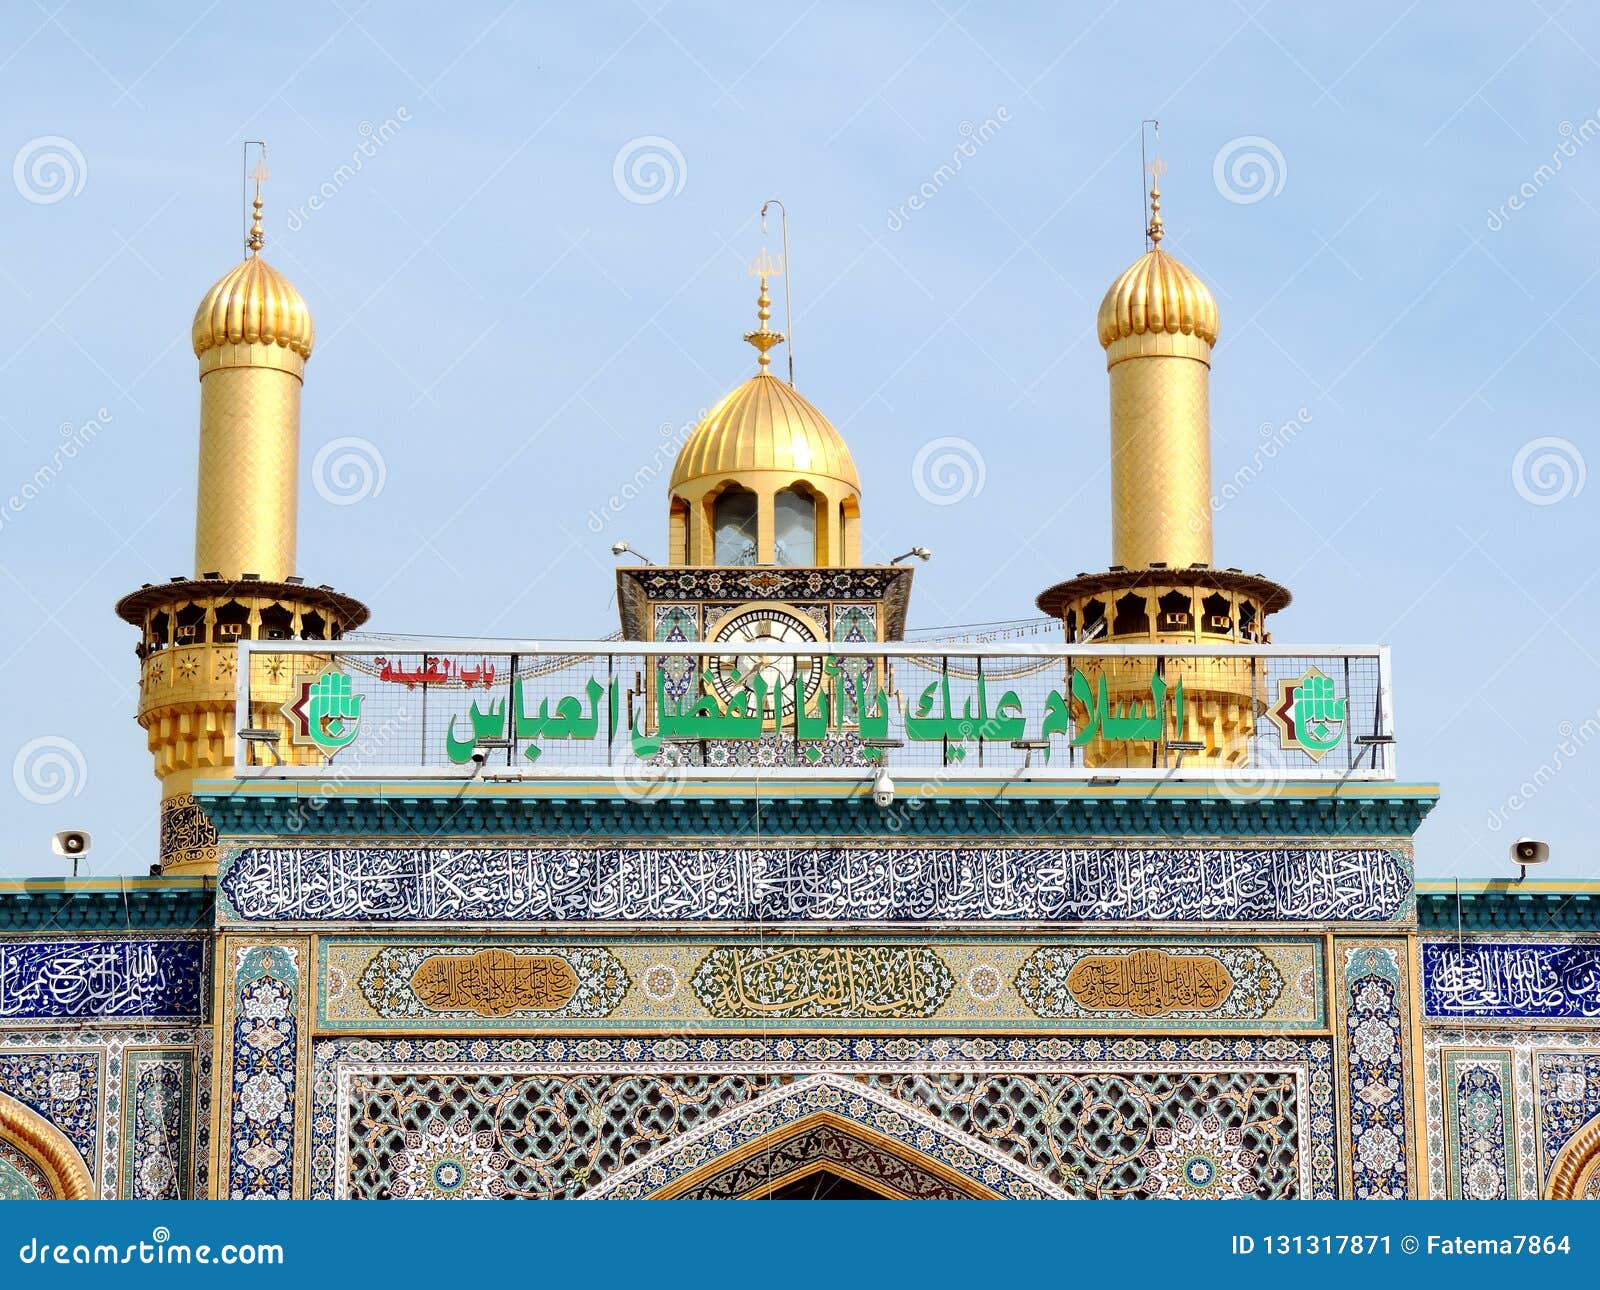 Holy Shrine Of Husayn Ibn Ali, Karbala, Iraq Stock Image - Image ...